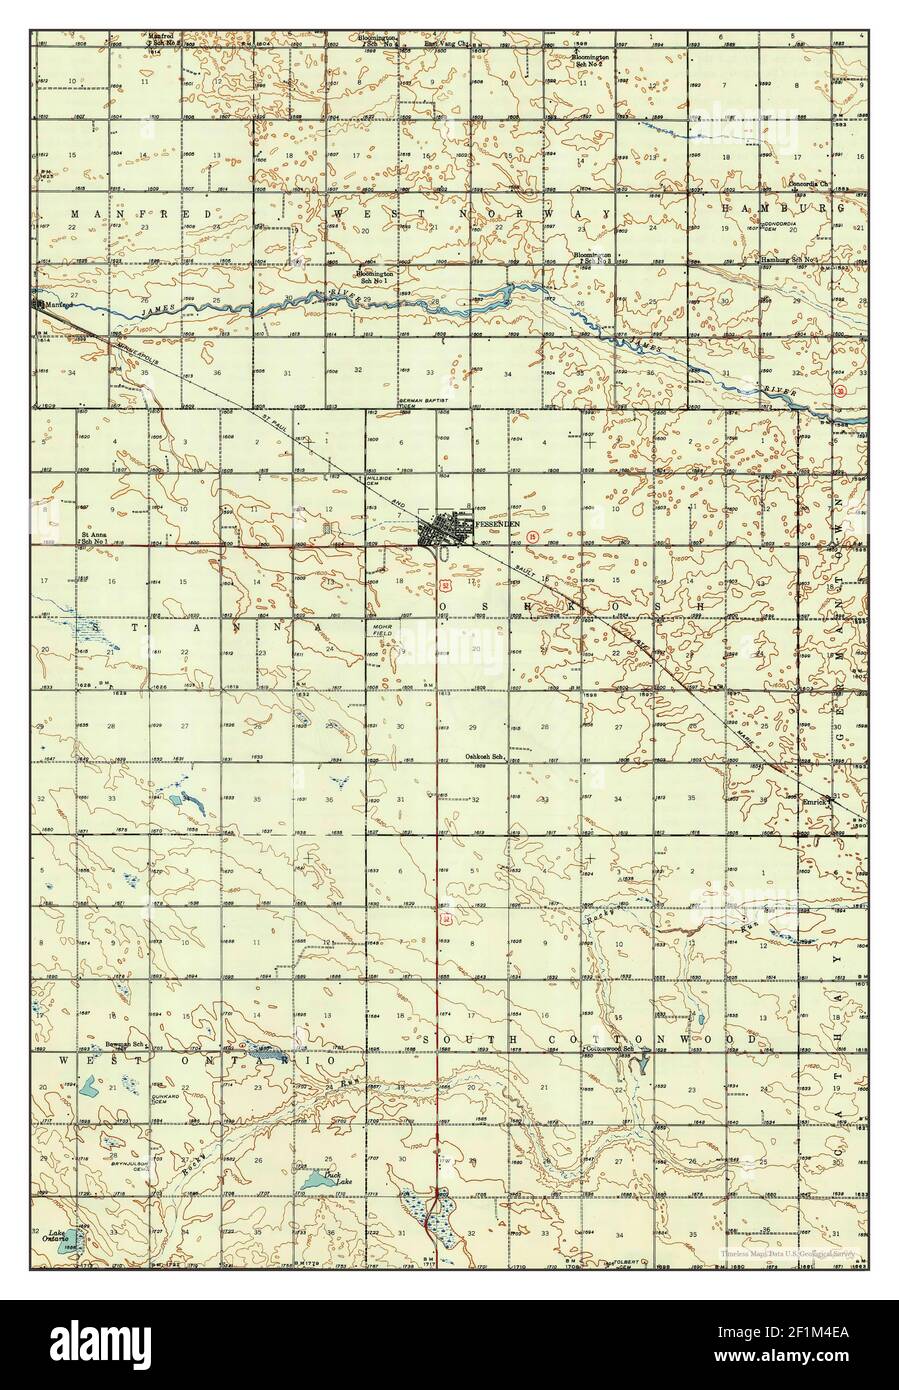 Fessenden, North Dakota, map 1948, 1:62500, United States of America by Timeless Maps, data U.S. Geological Survey Stock Photo